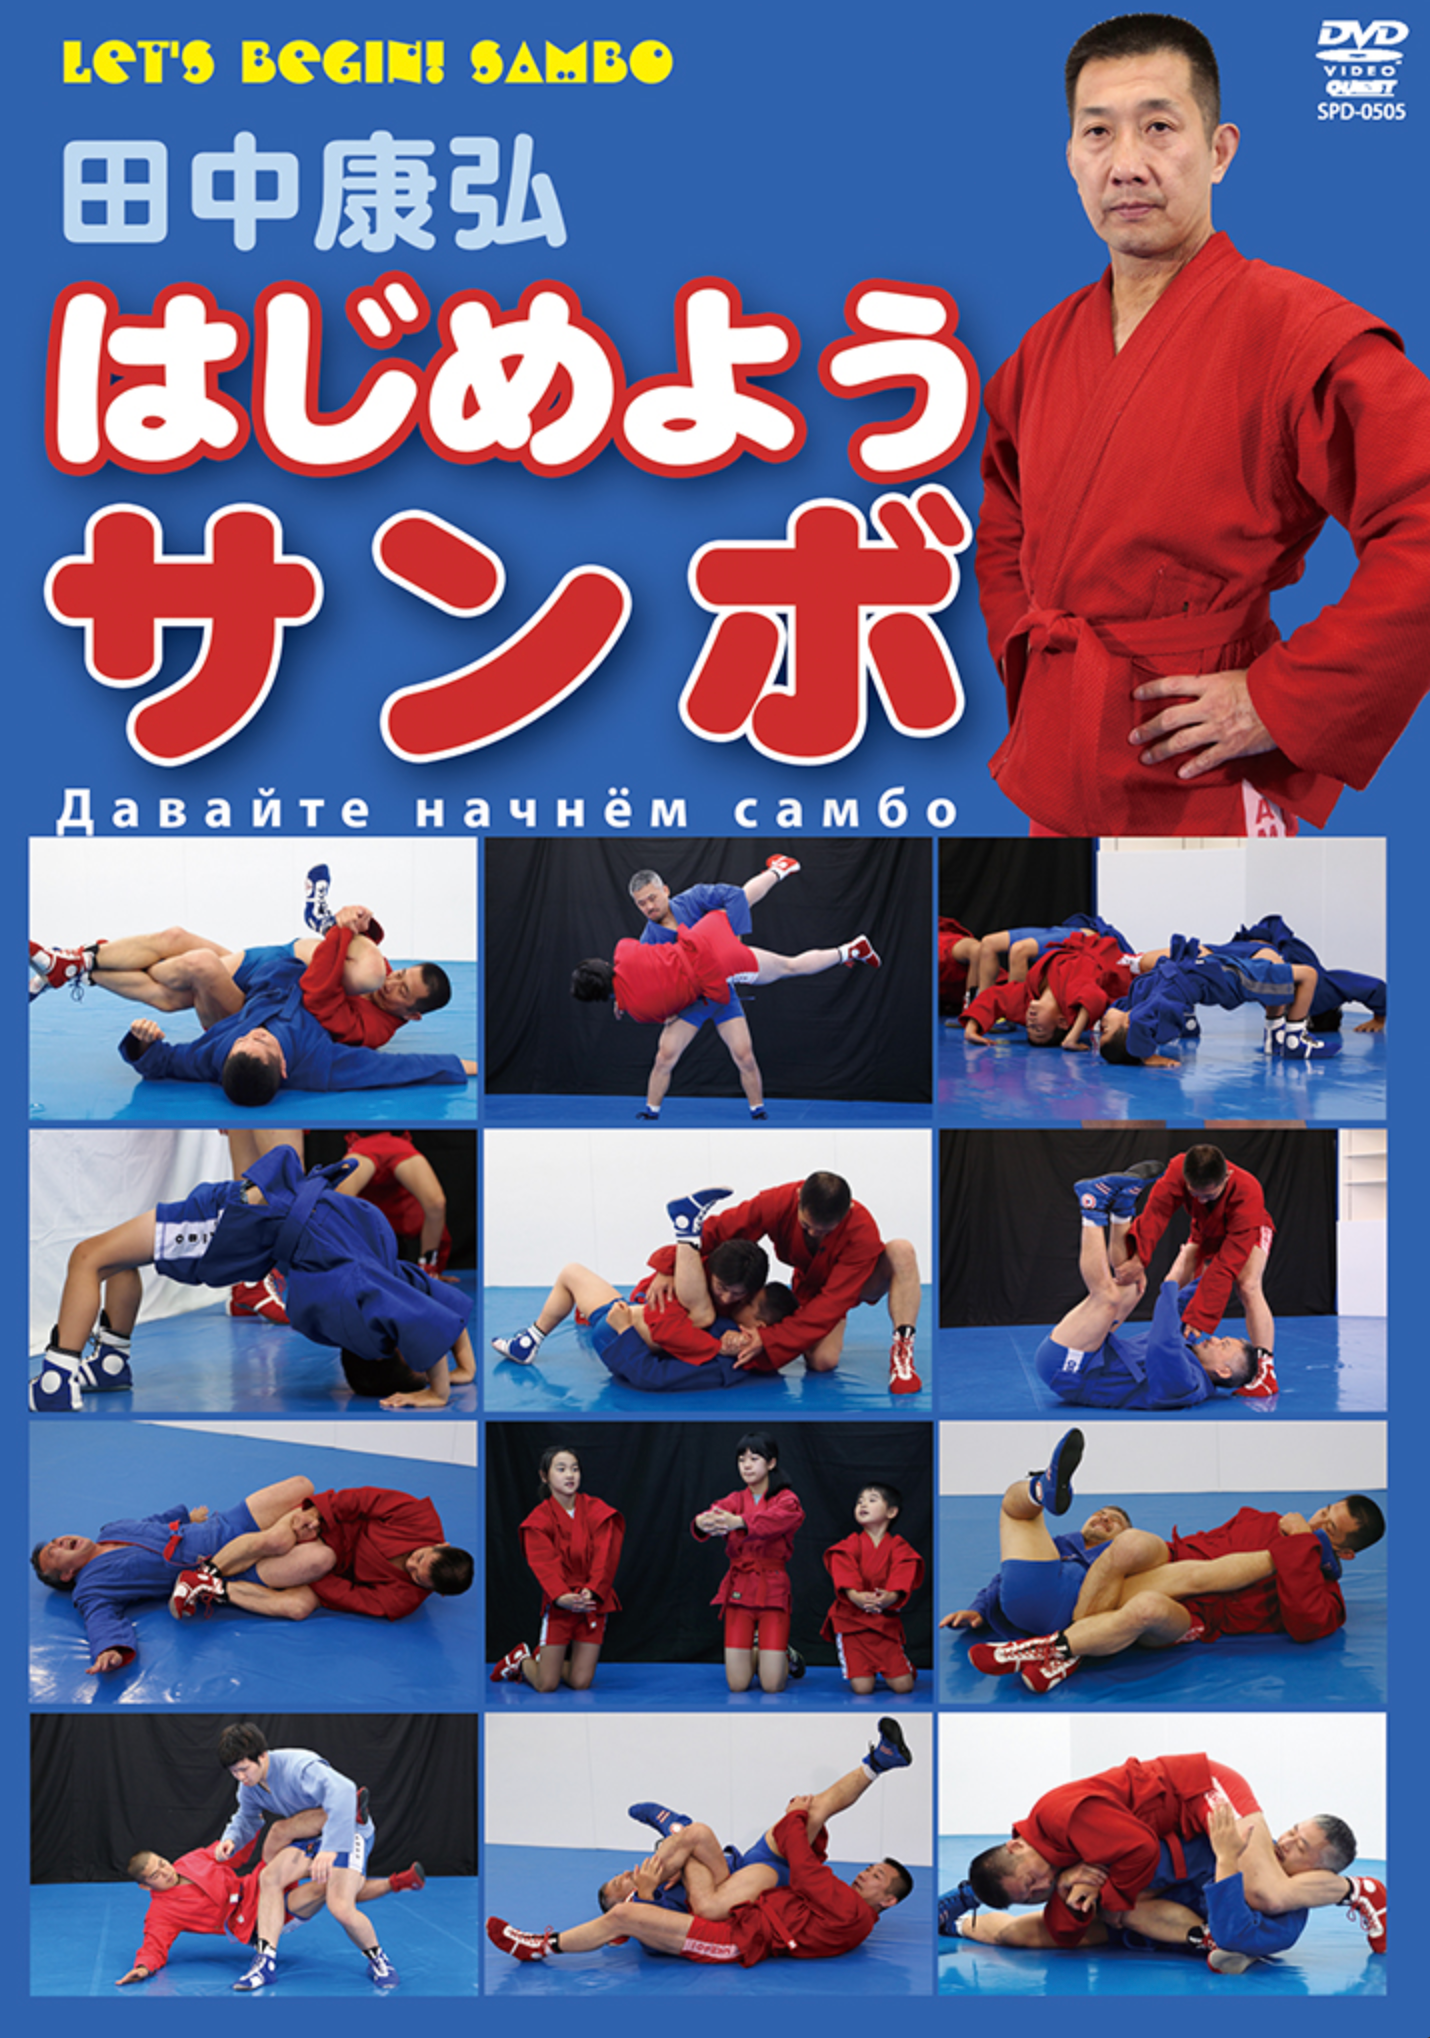 Sambo for Beginners DVD by Yasuhiro Tanaka - Budovideos Inc